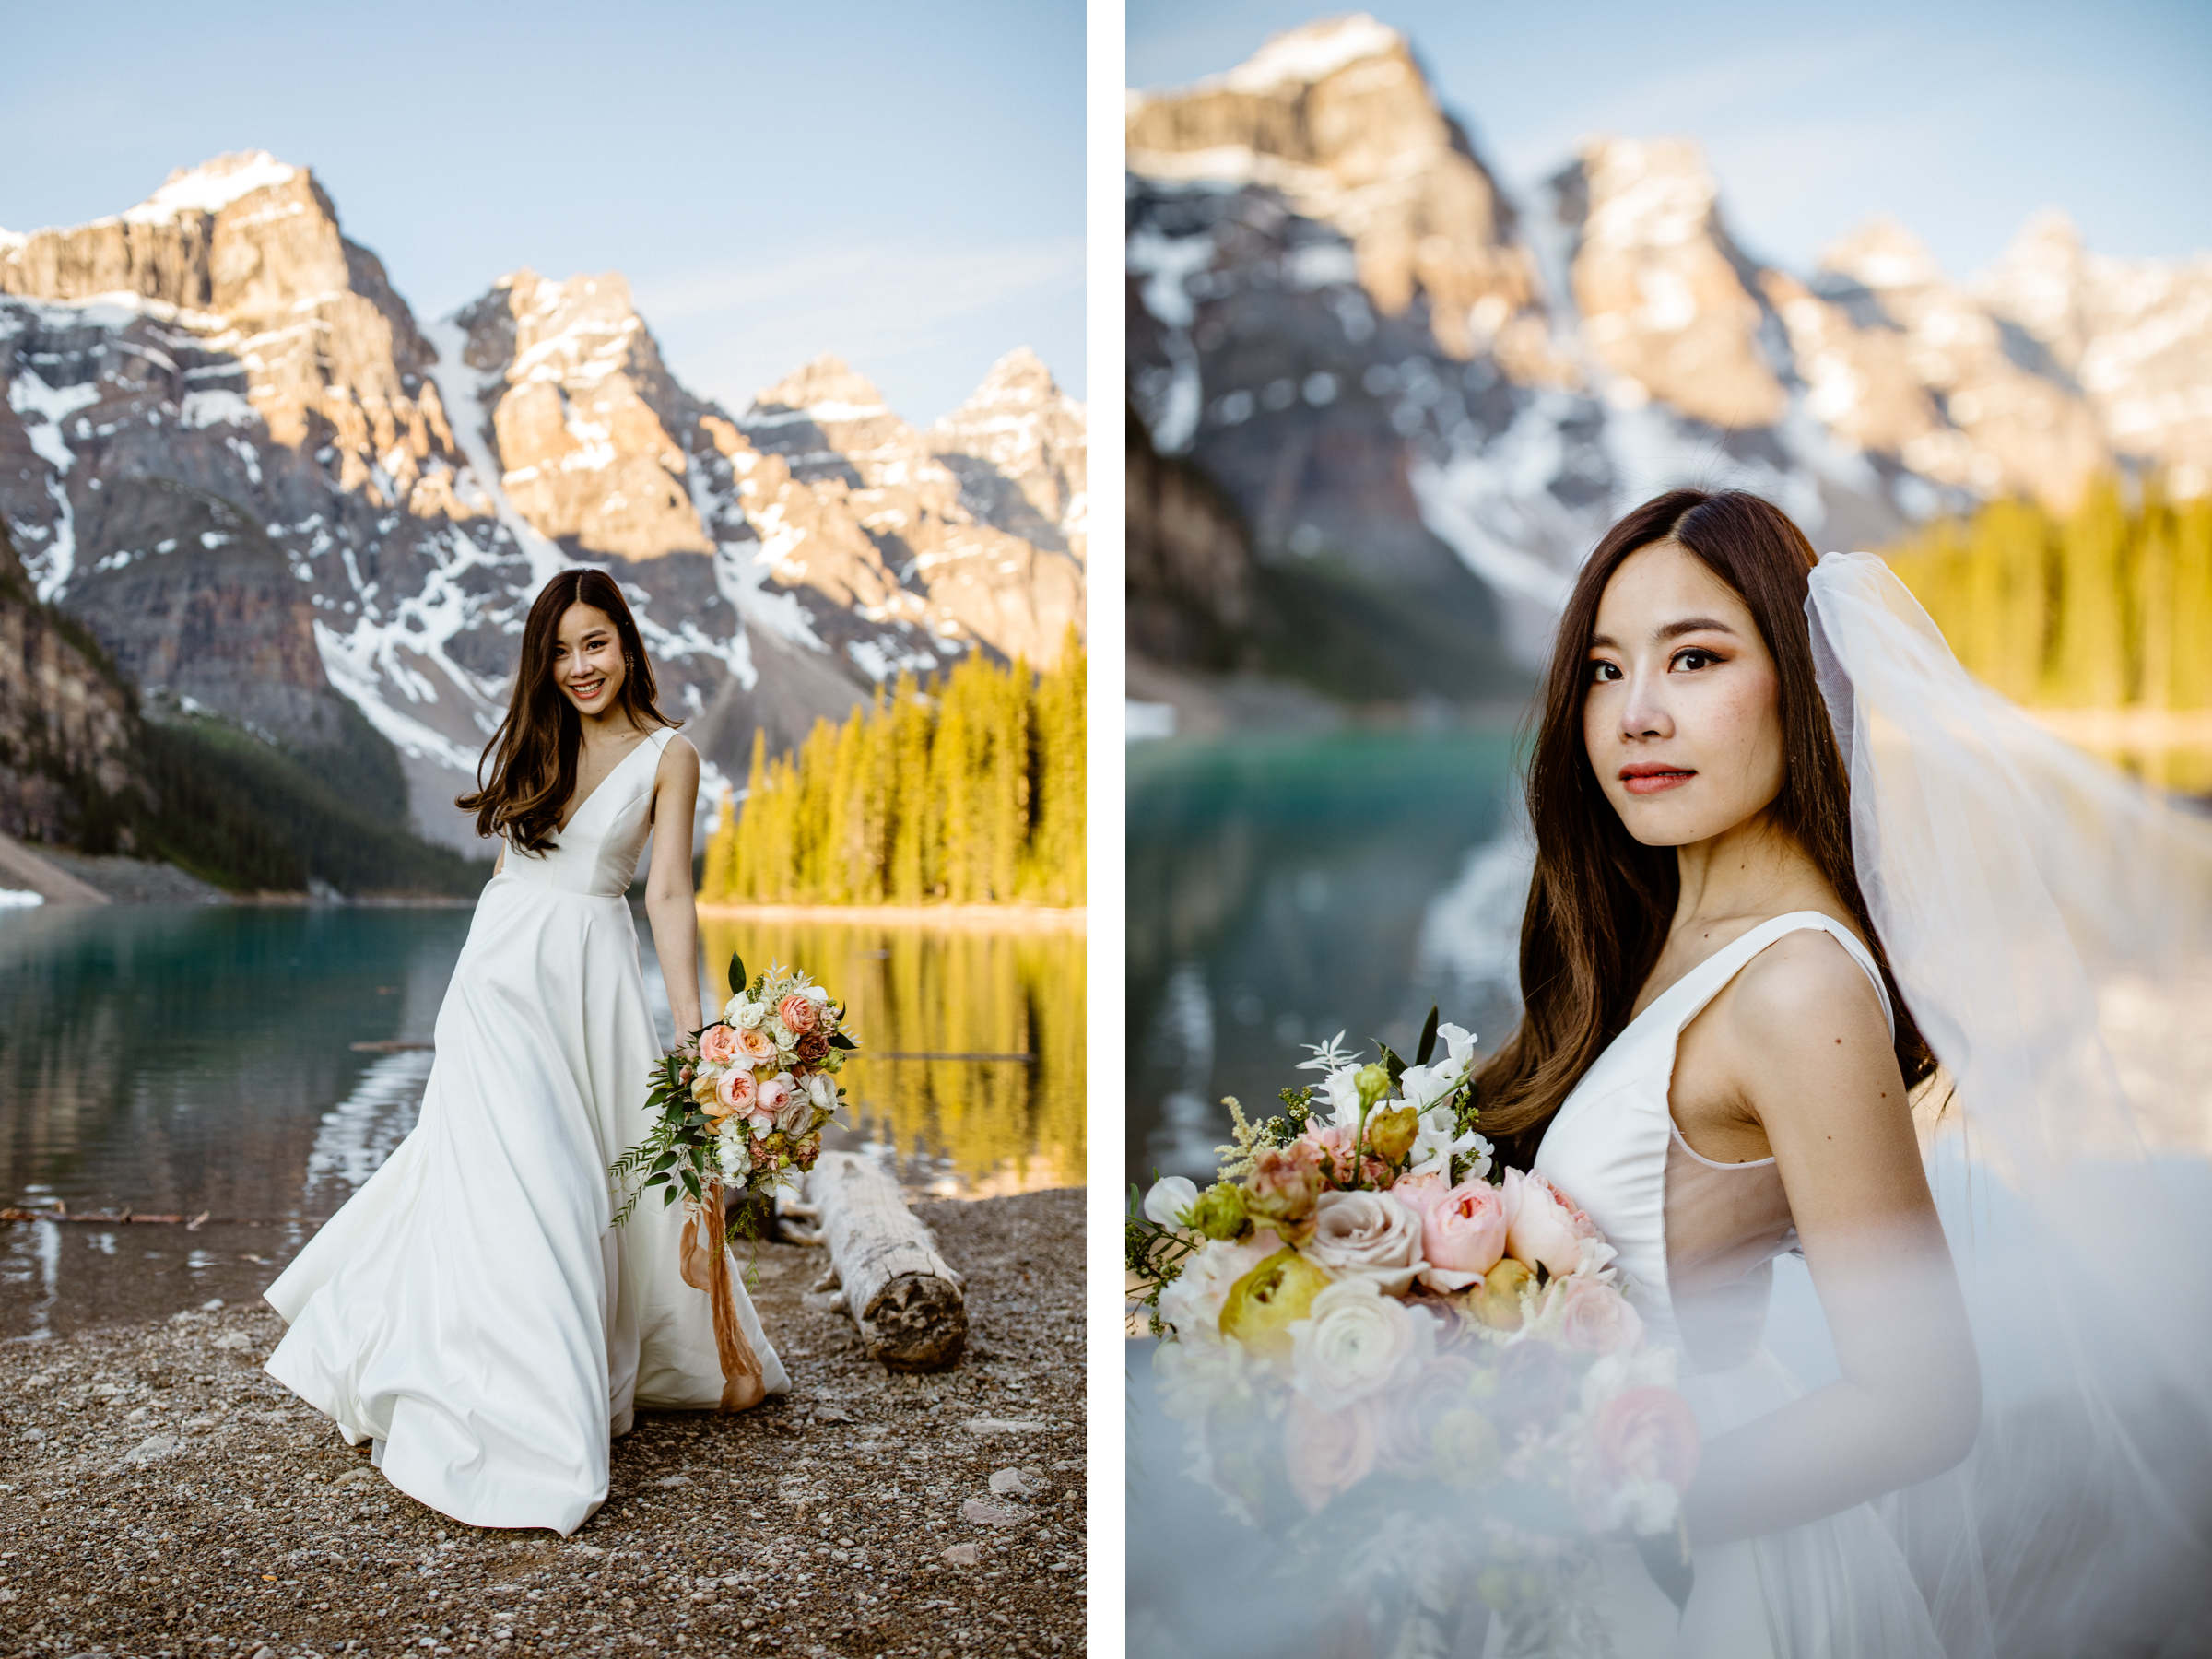 Banff Pre Wedding Photography at Moraine Lake - Photo 28